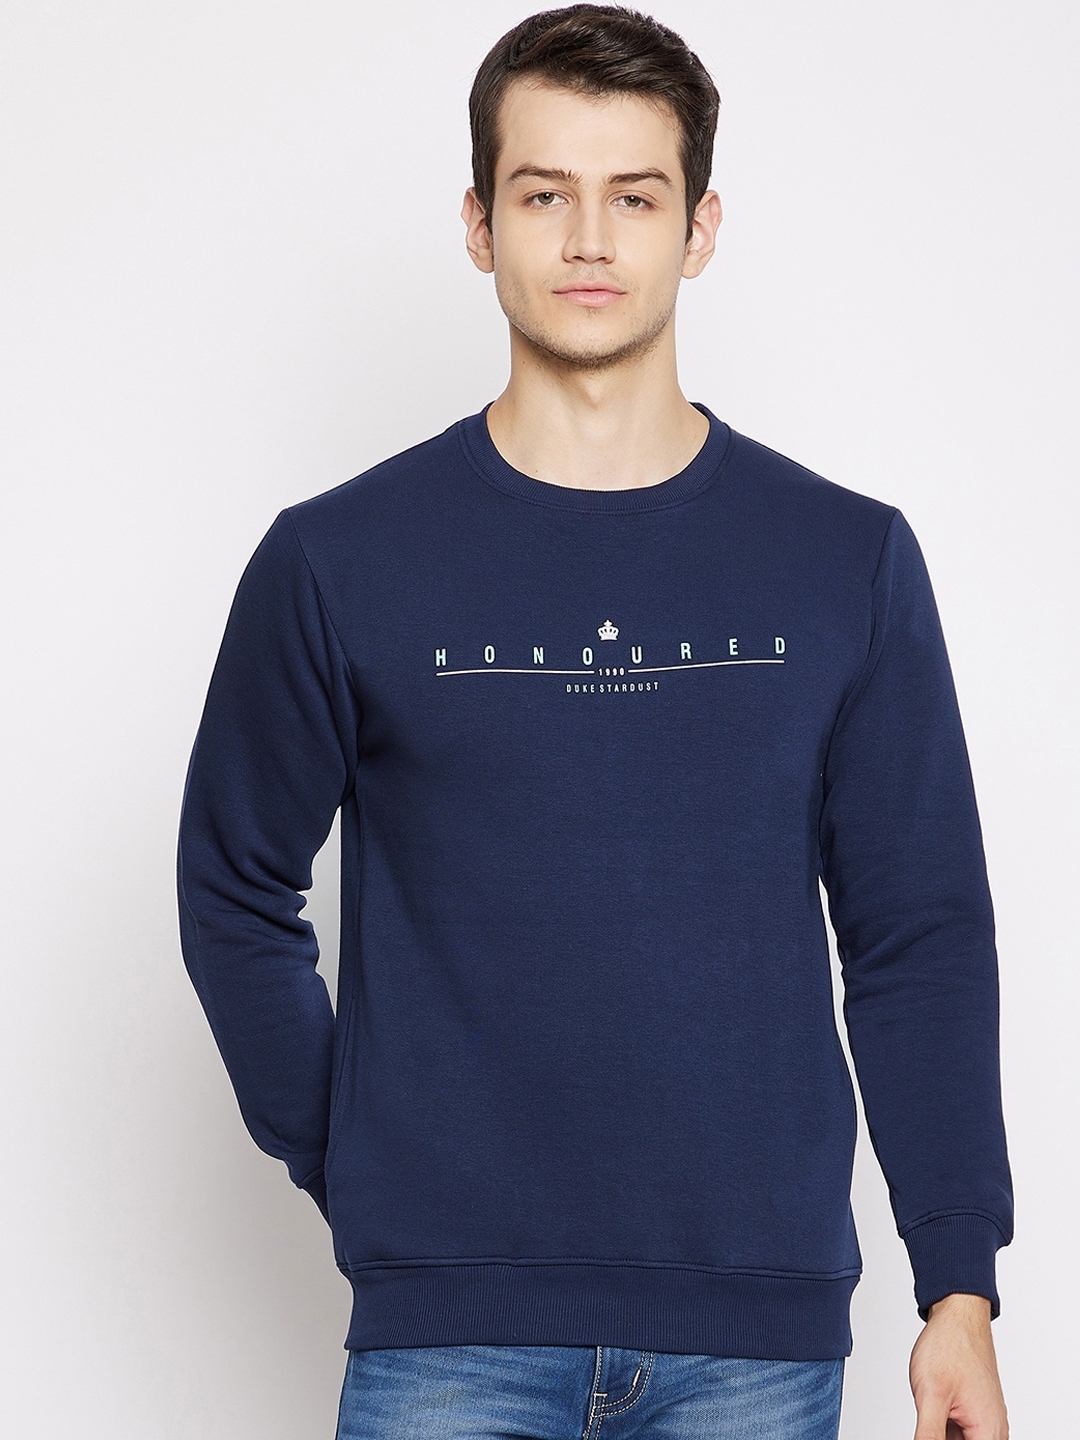 Buy Duke Men Blue Printed Sweatshirt - Sweatshirts for Men 15922730 ...